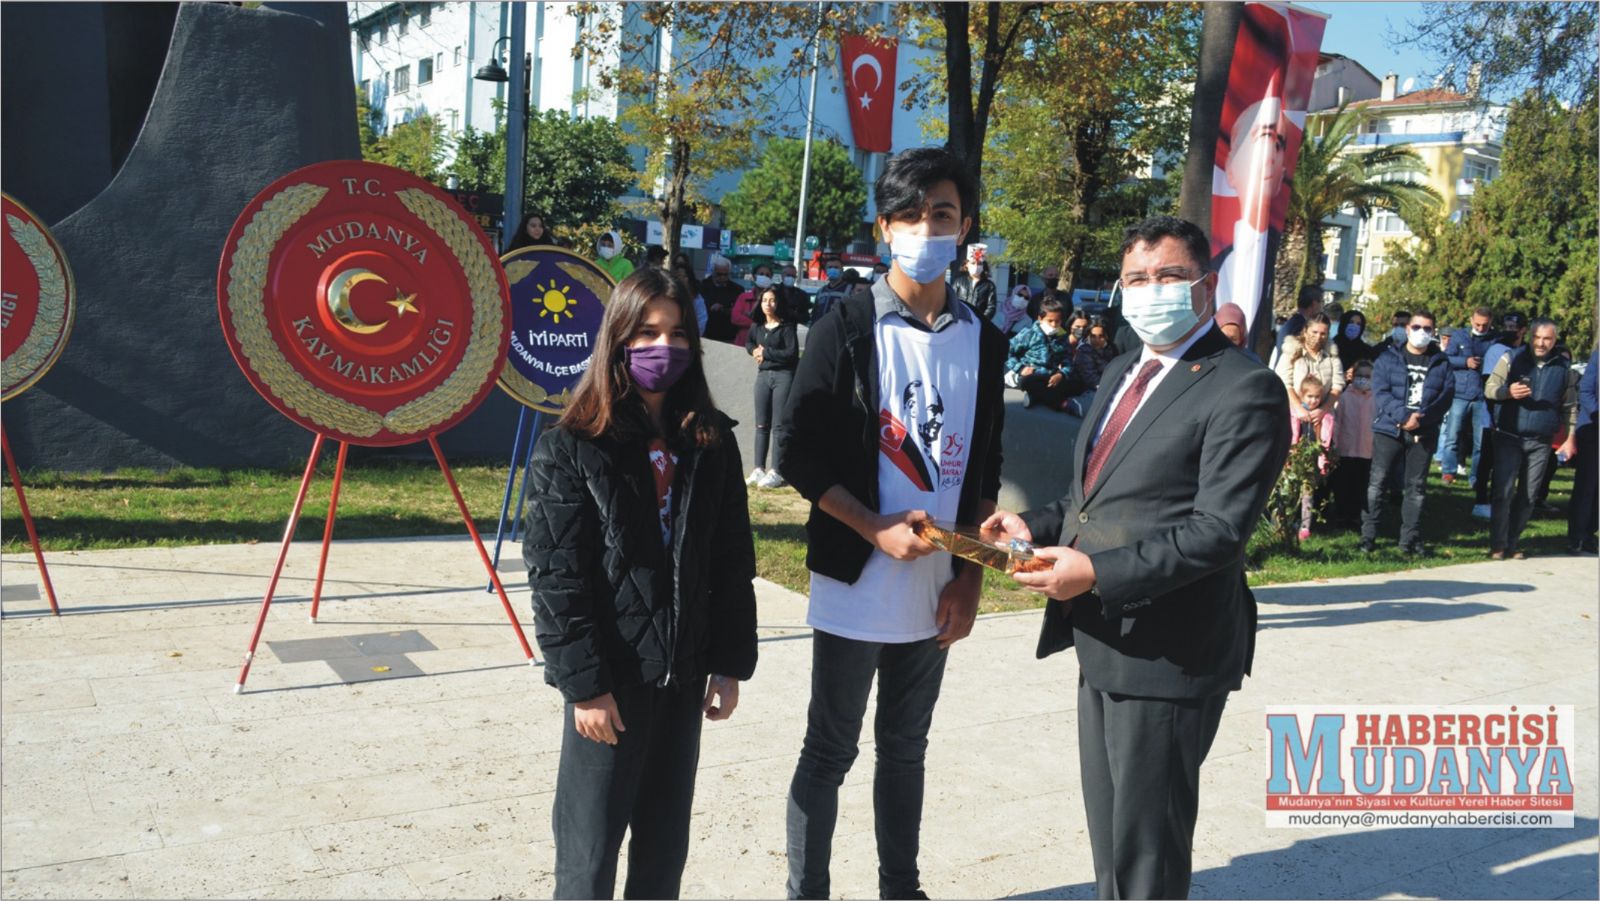 Mudanya'da Cokulu  Cumhuriyet Bayram Kutlamas